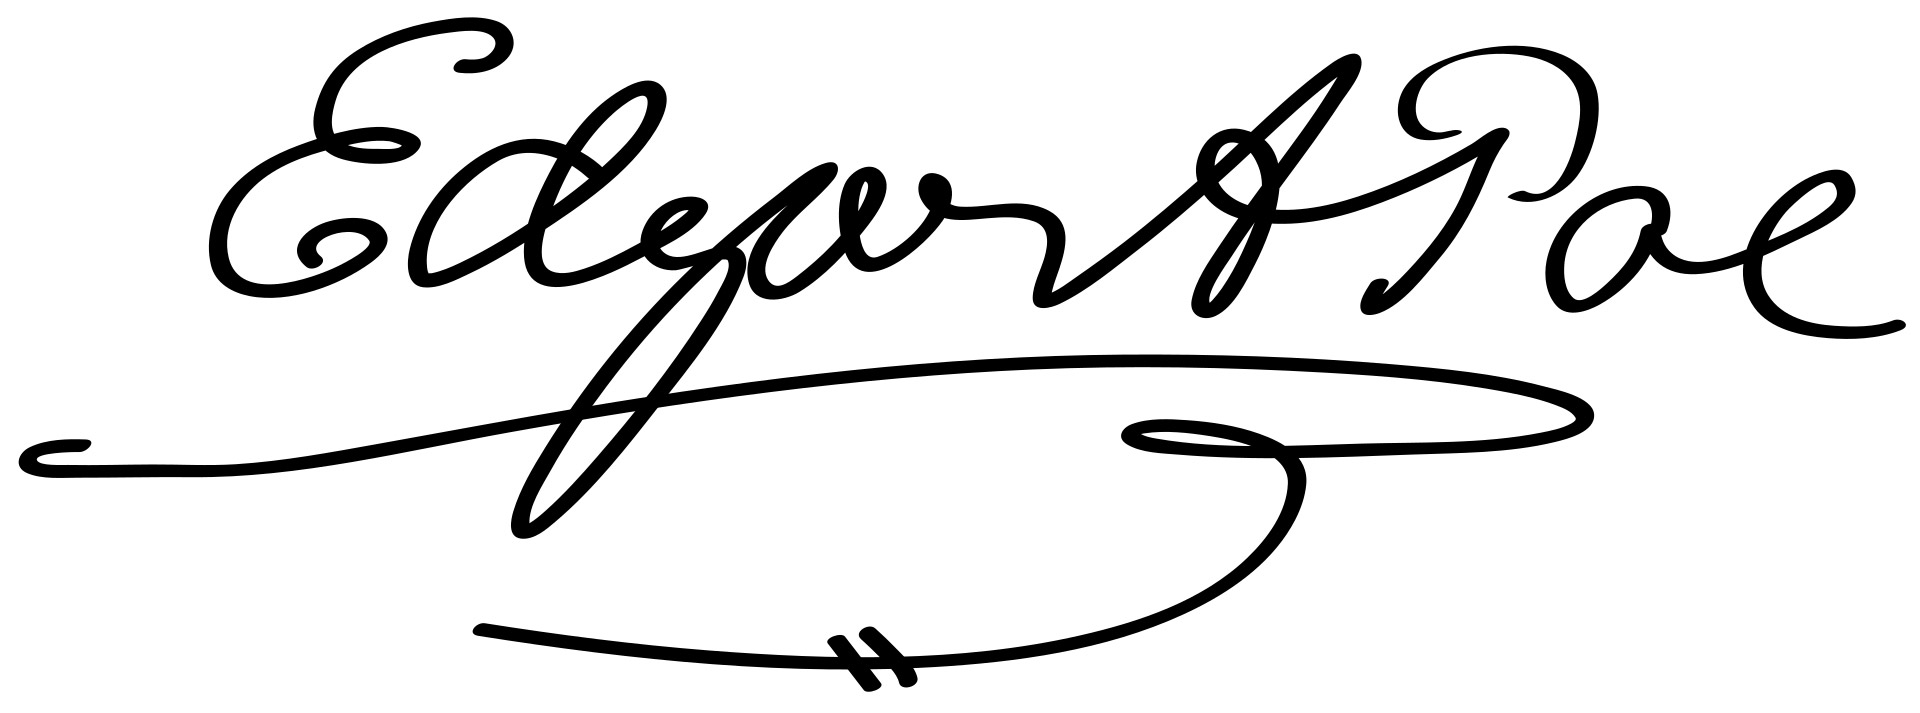 official signature of celebrity Edgar Allan Poe